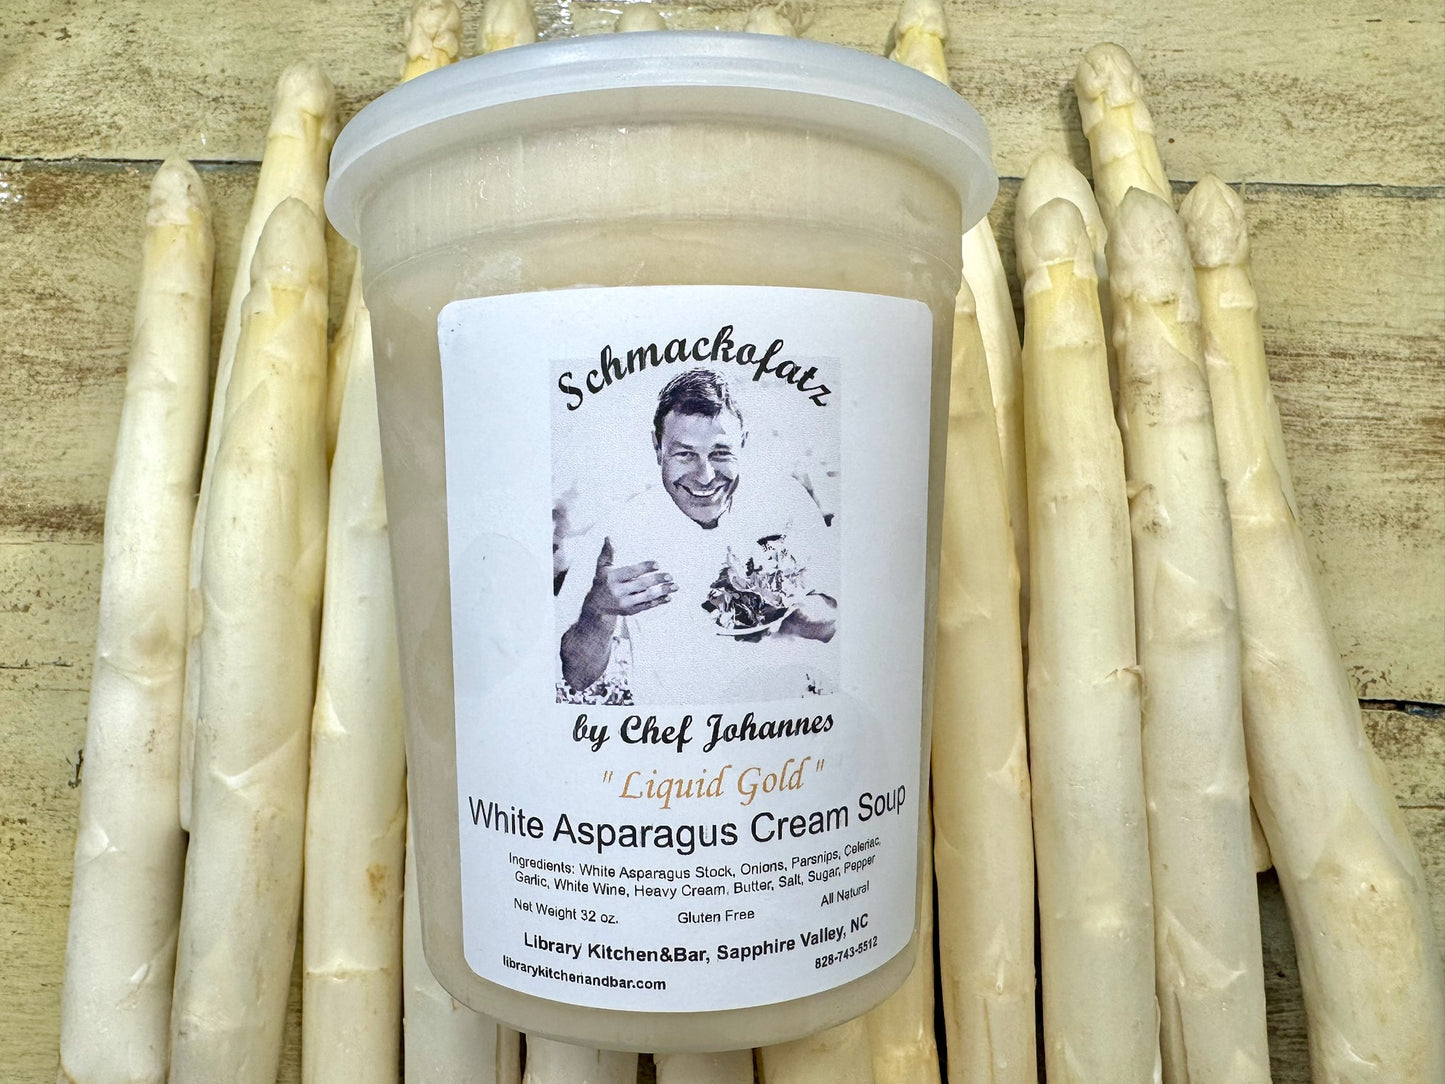 White Asparagus Cream Soup